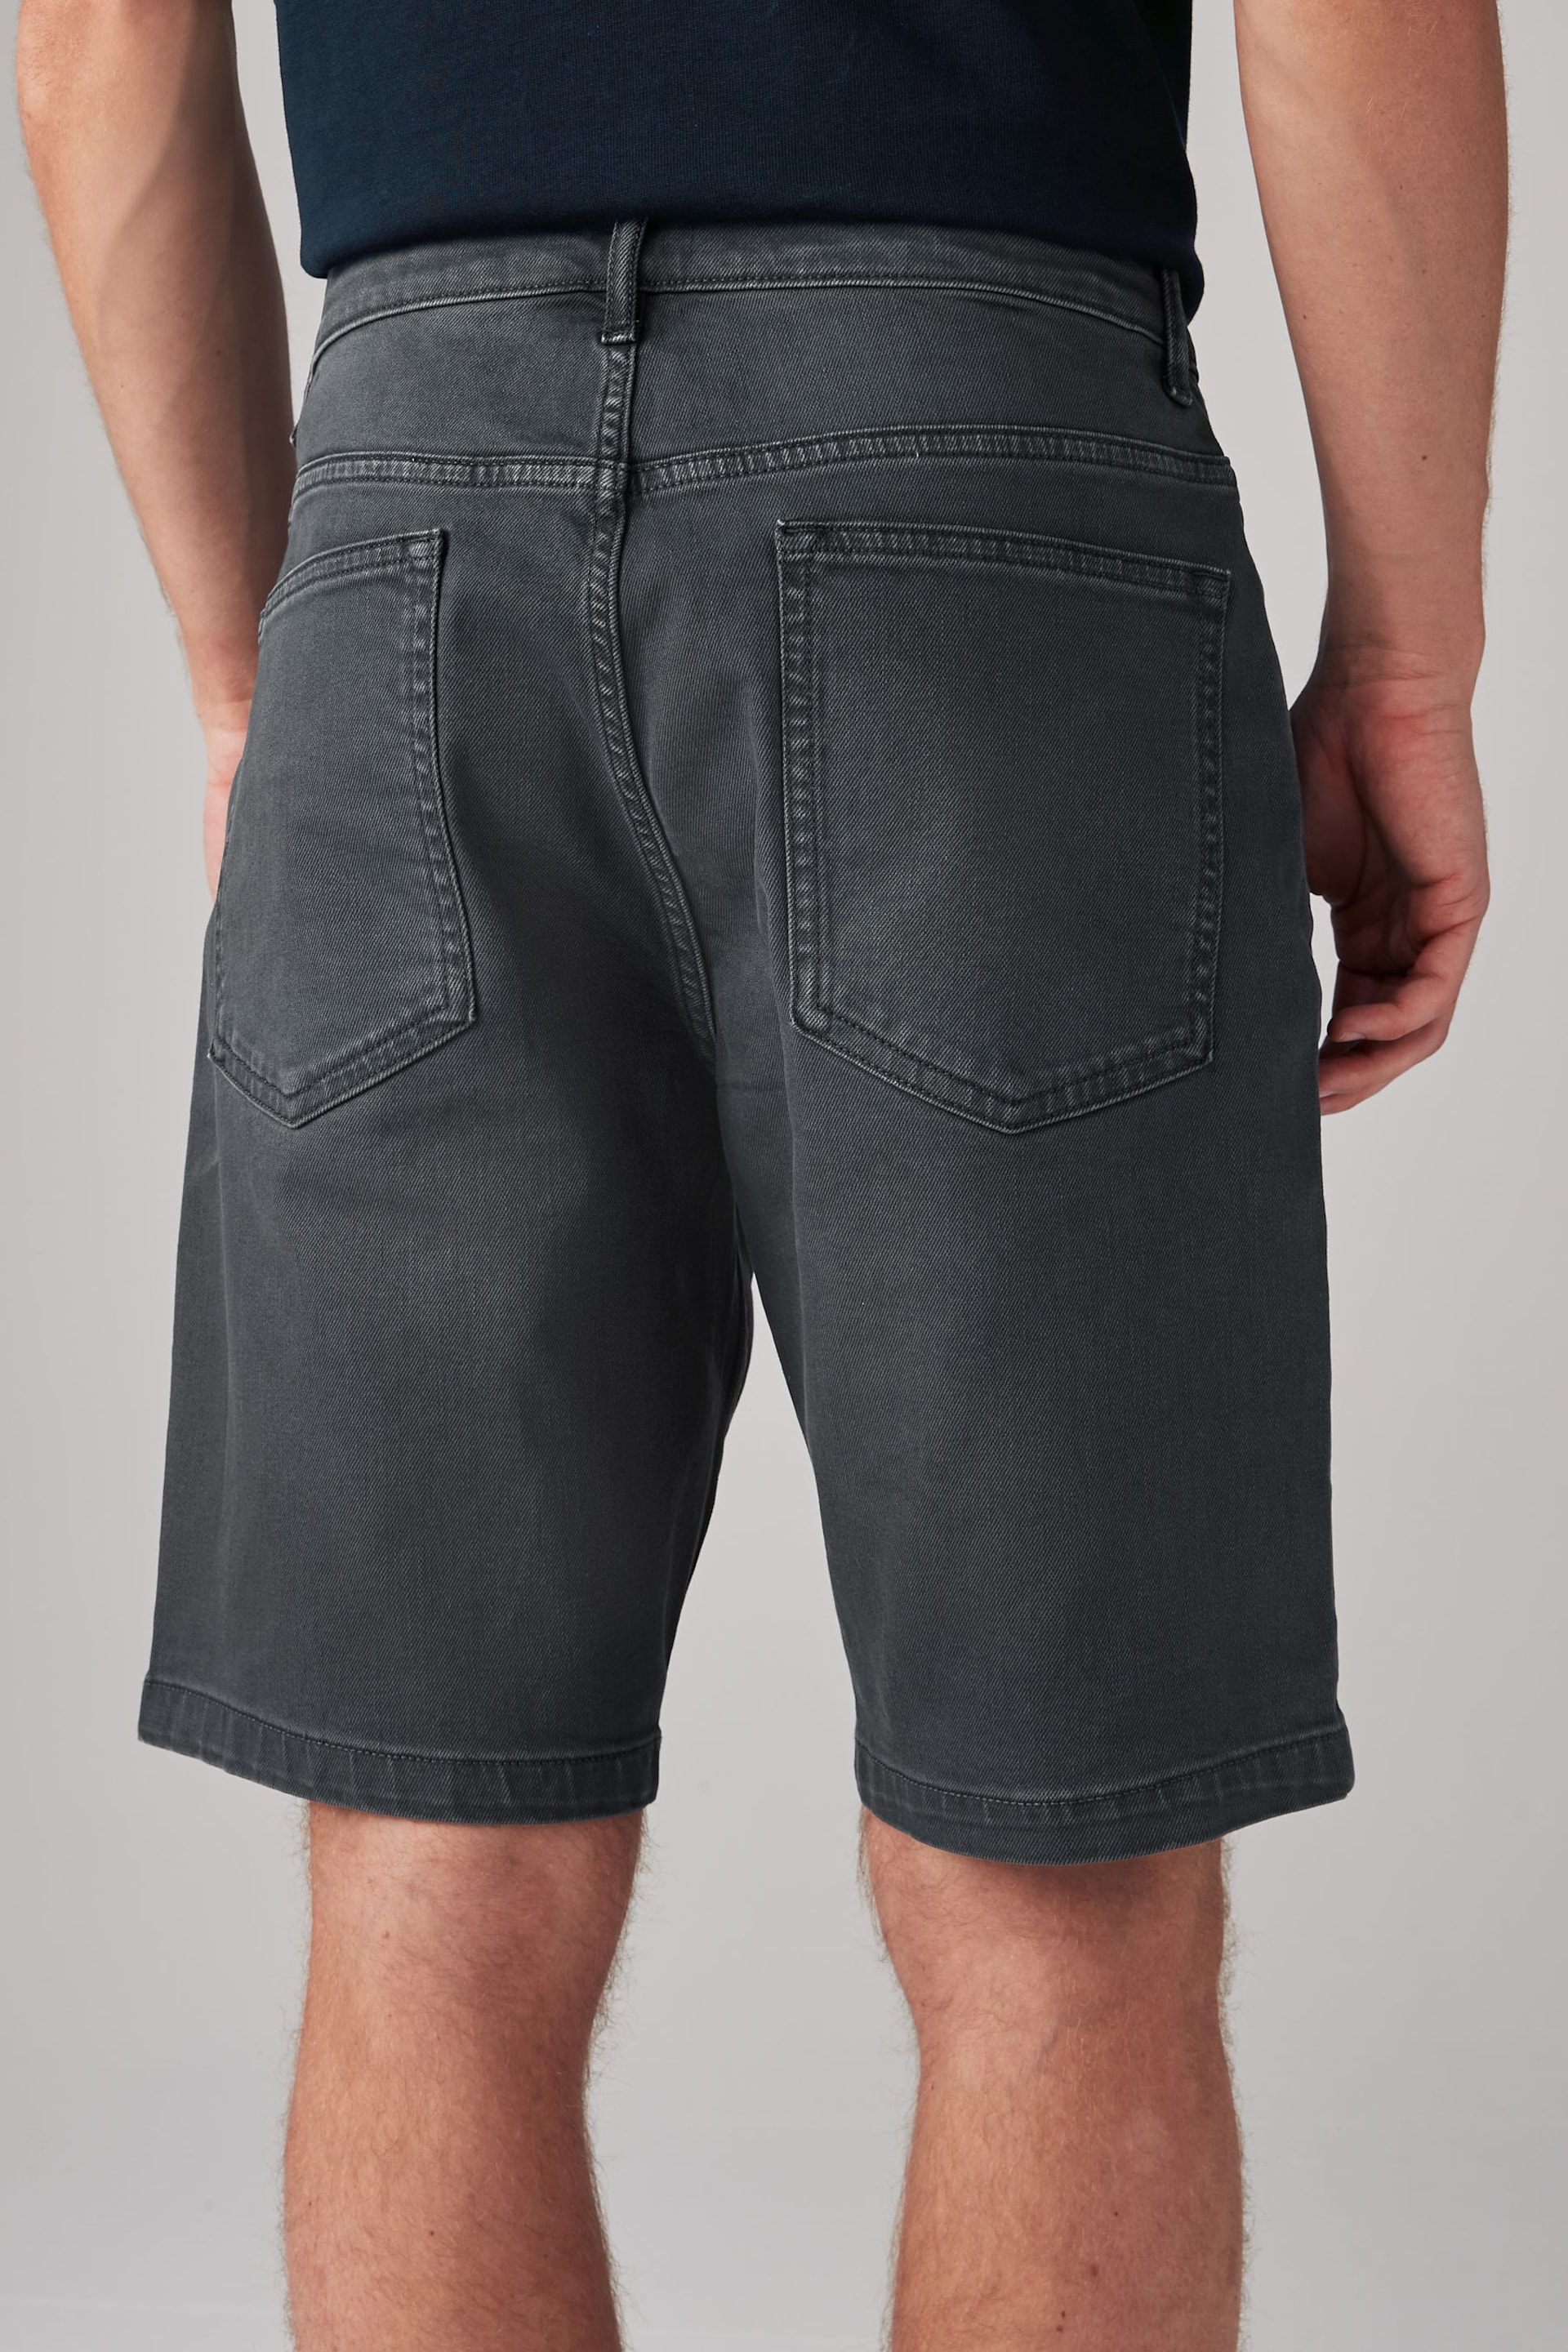 Smoke Grey Garment Dye Denim Shorts - Image 2 of 4